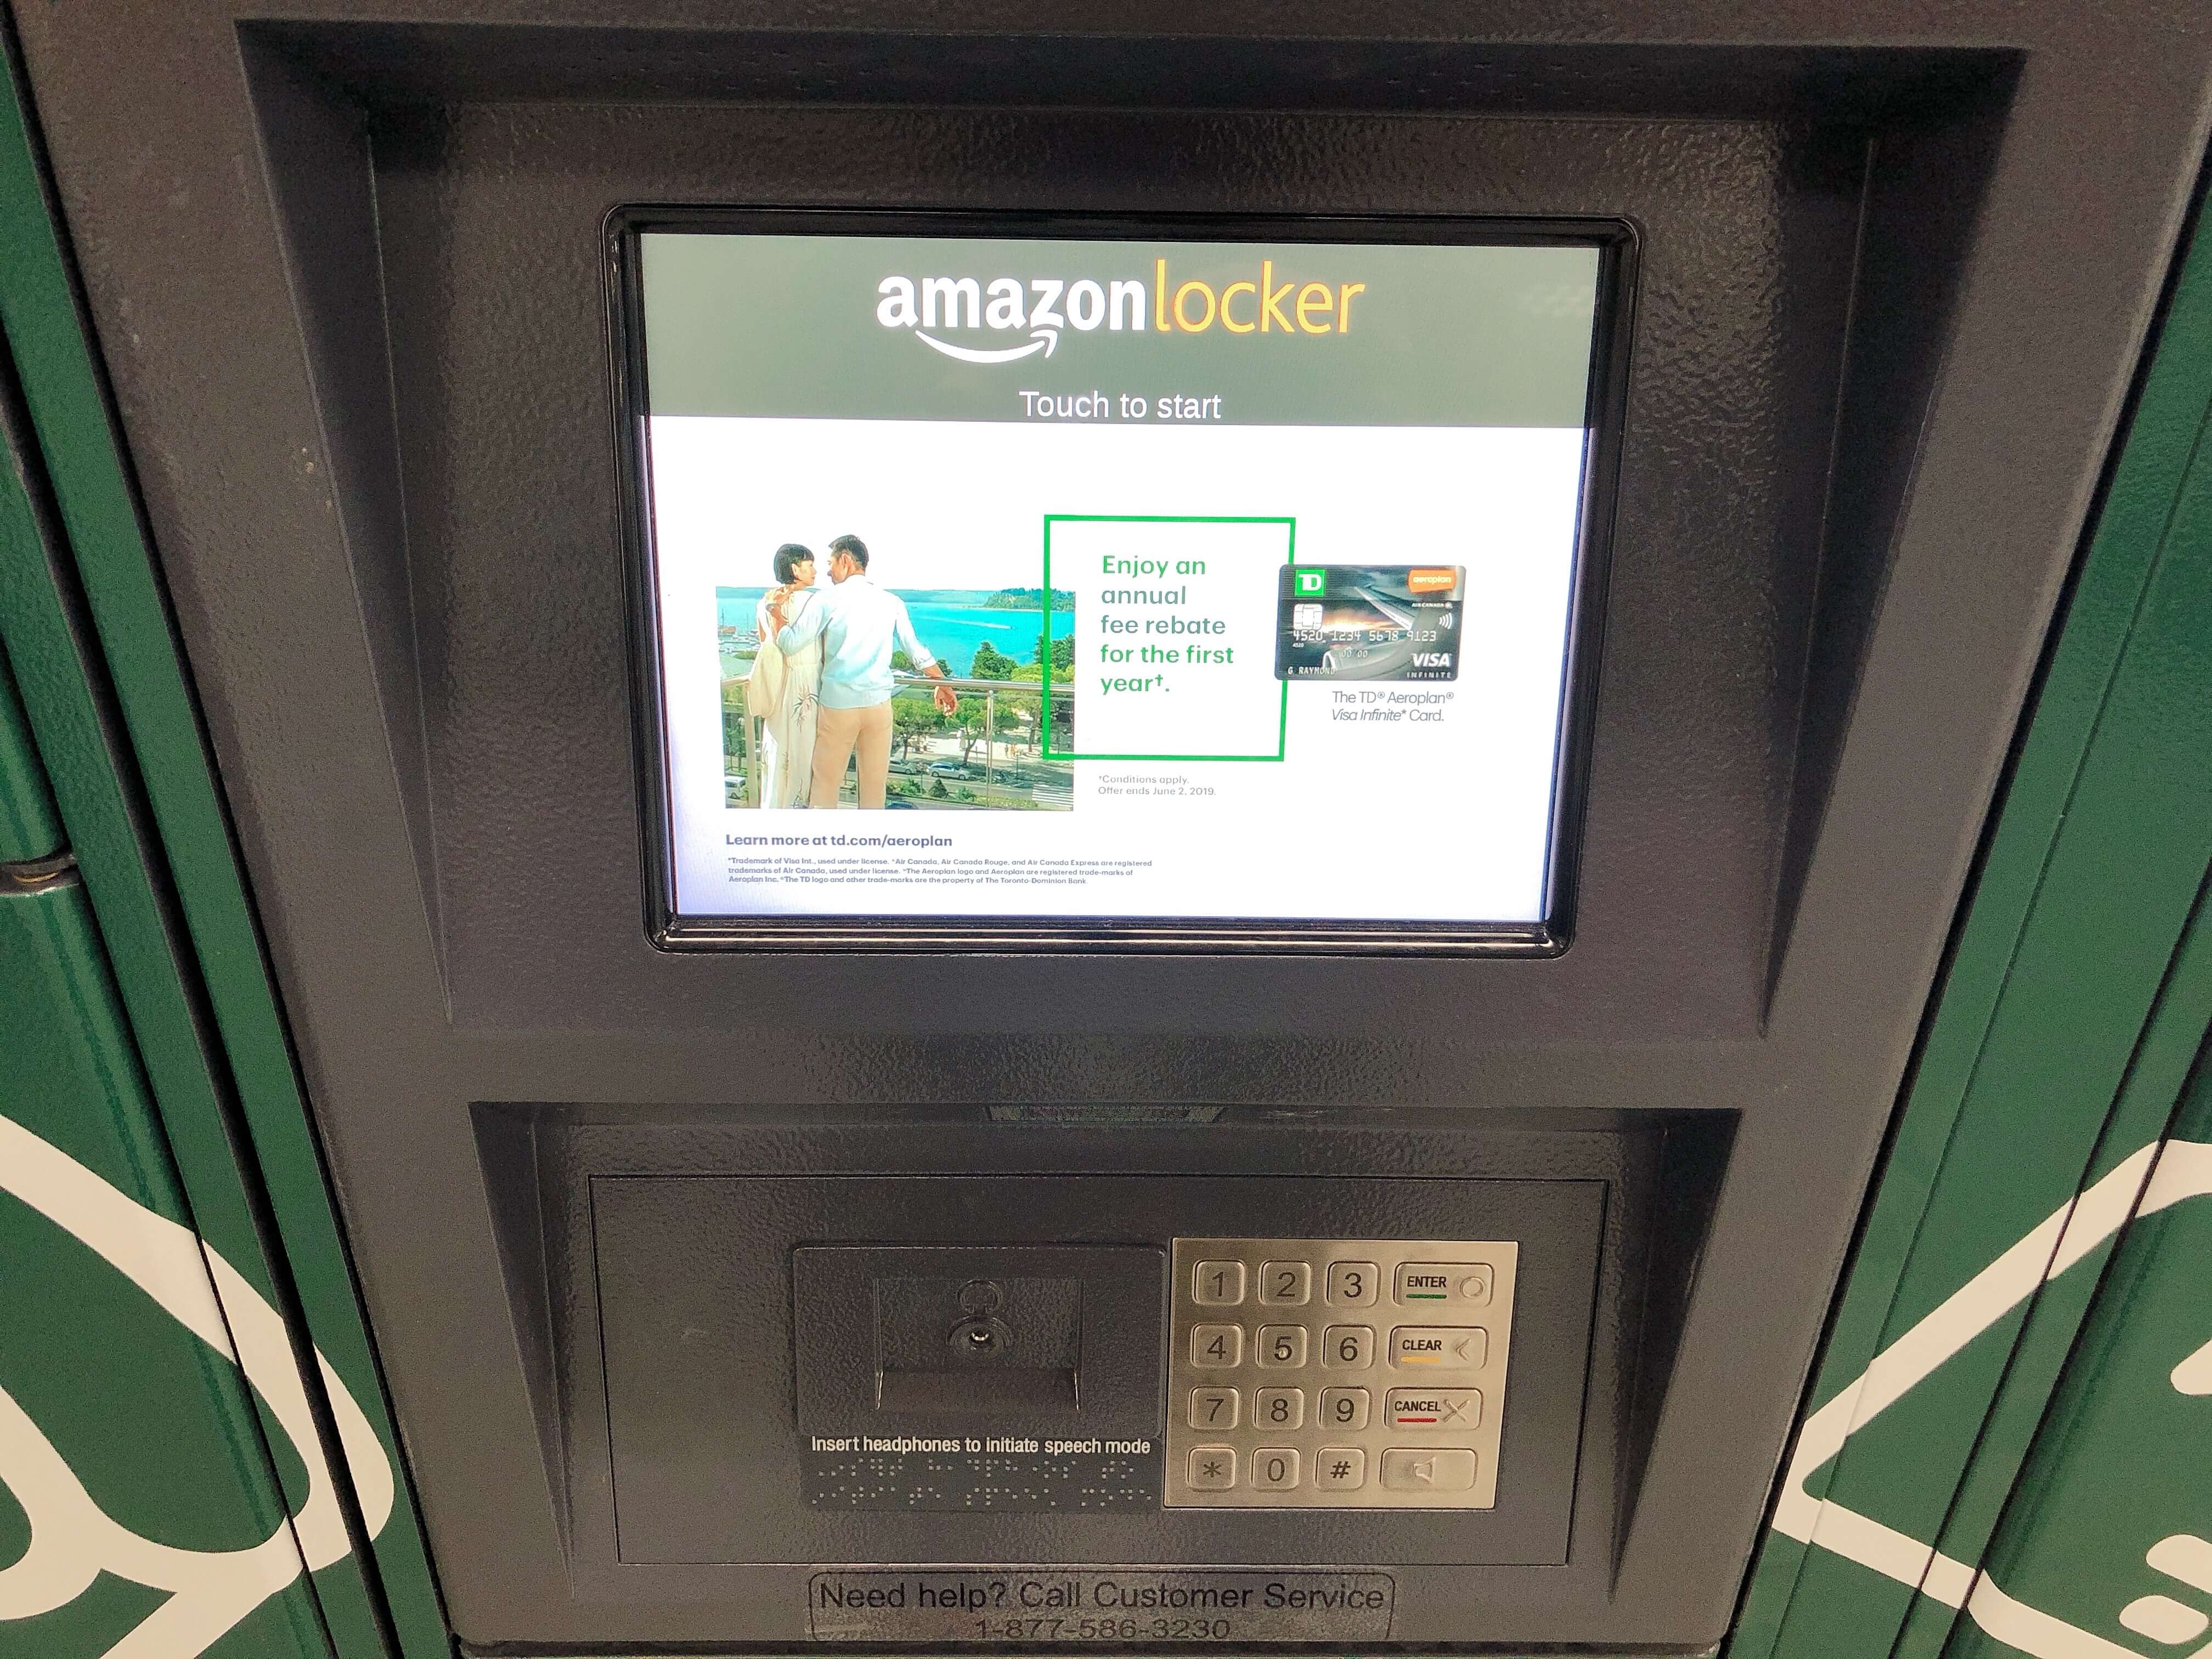 Amazon locker